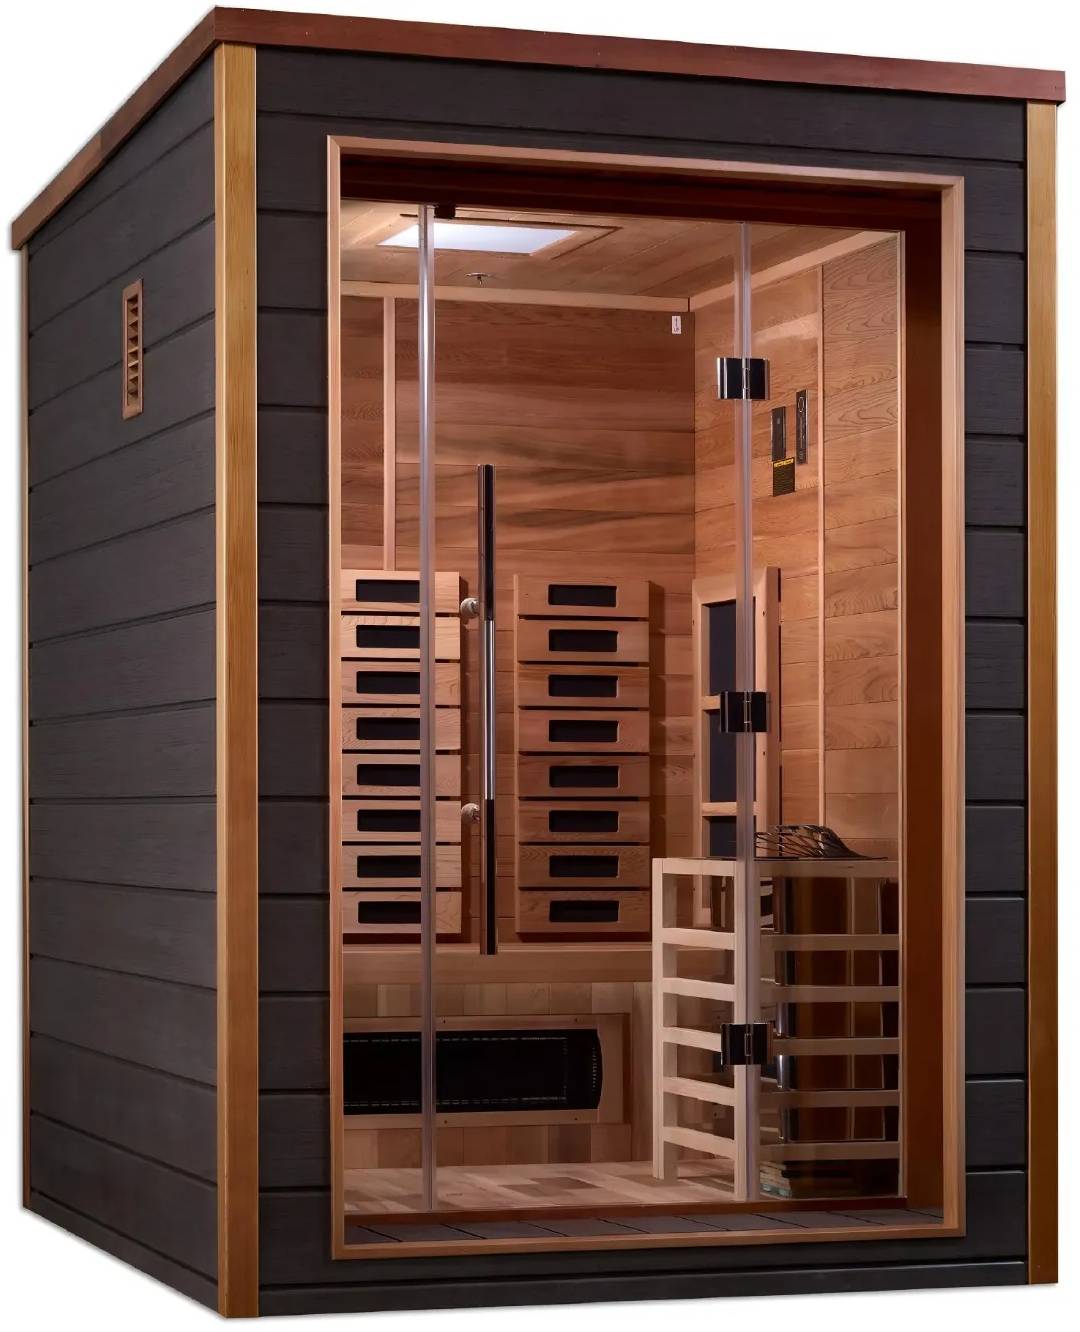 ZiahCare's Golden Designs Nora 2 Person Hybrid Sauna Mockup Image 4